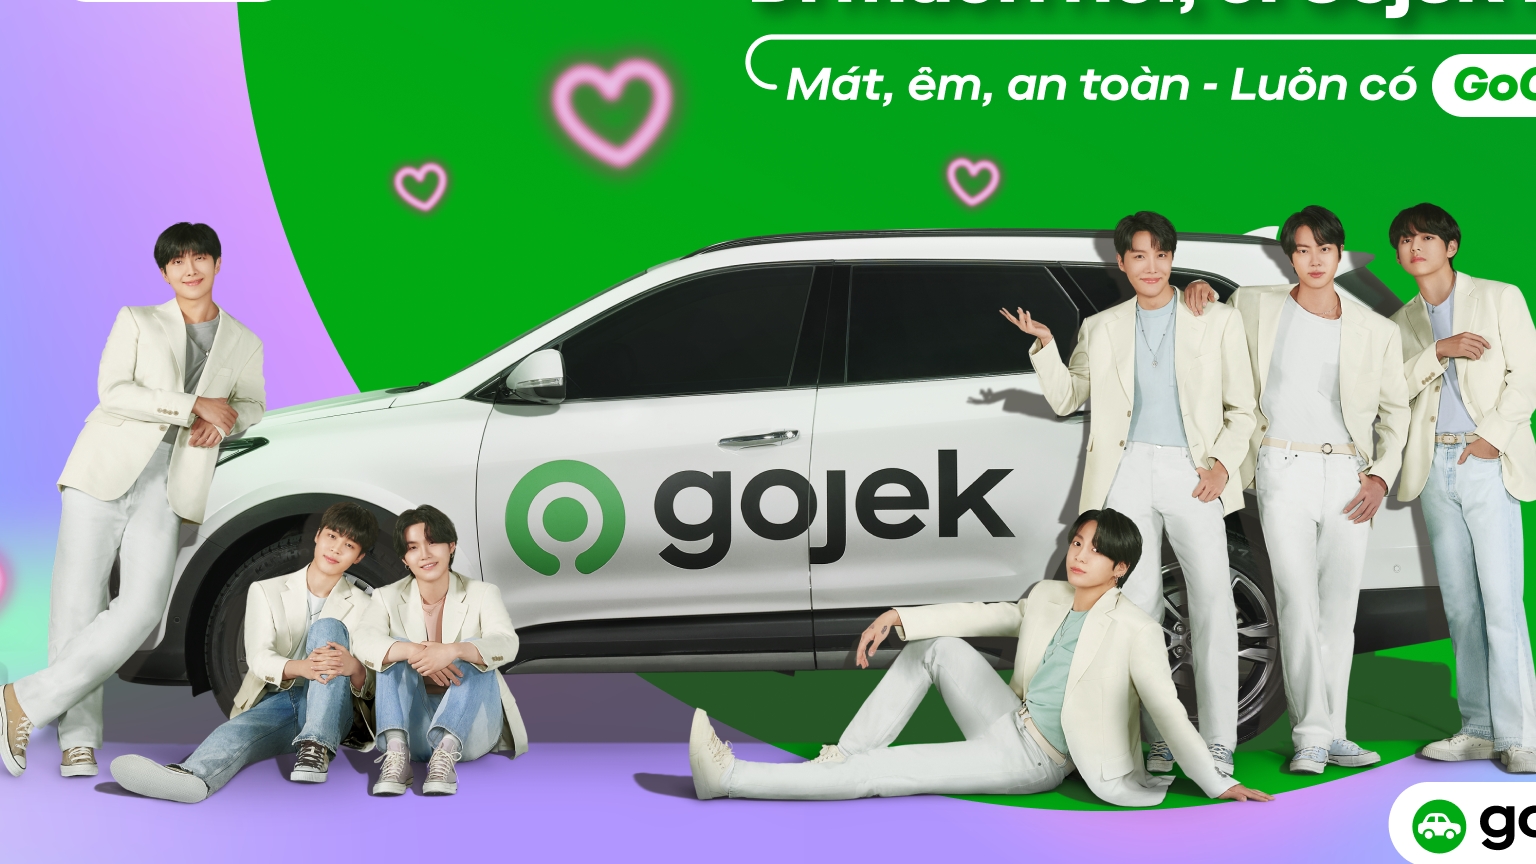 Gojek Launches BTS Gojek Campaign in Vietnam